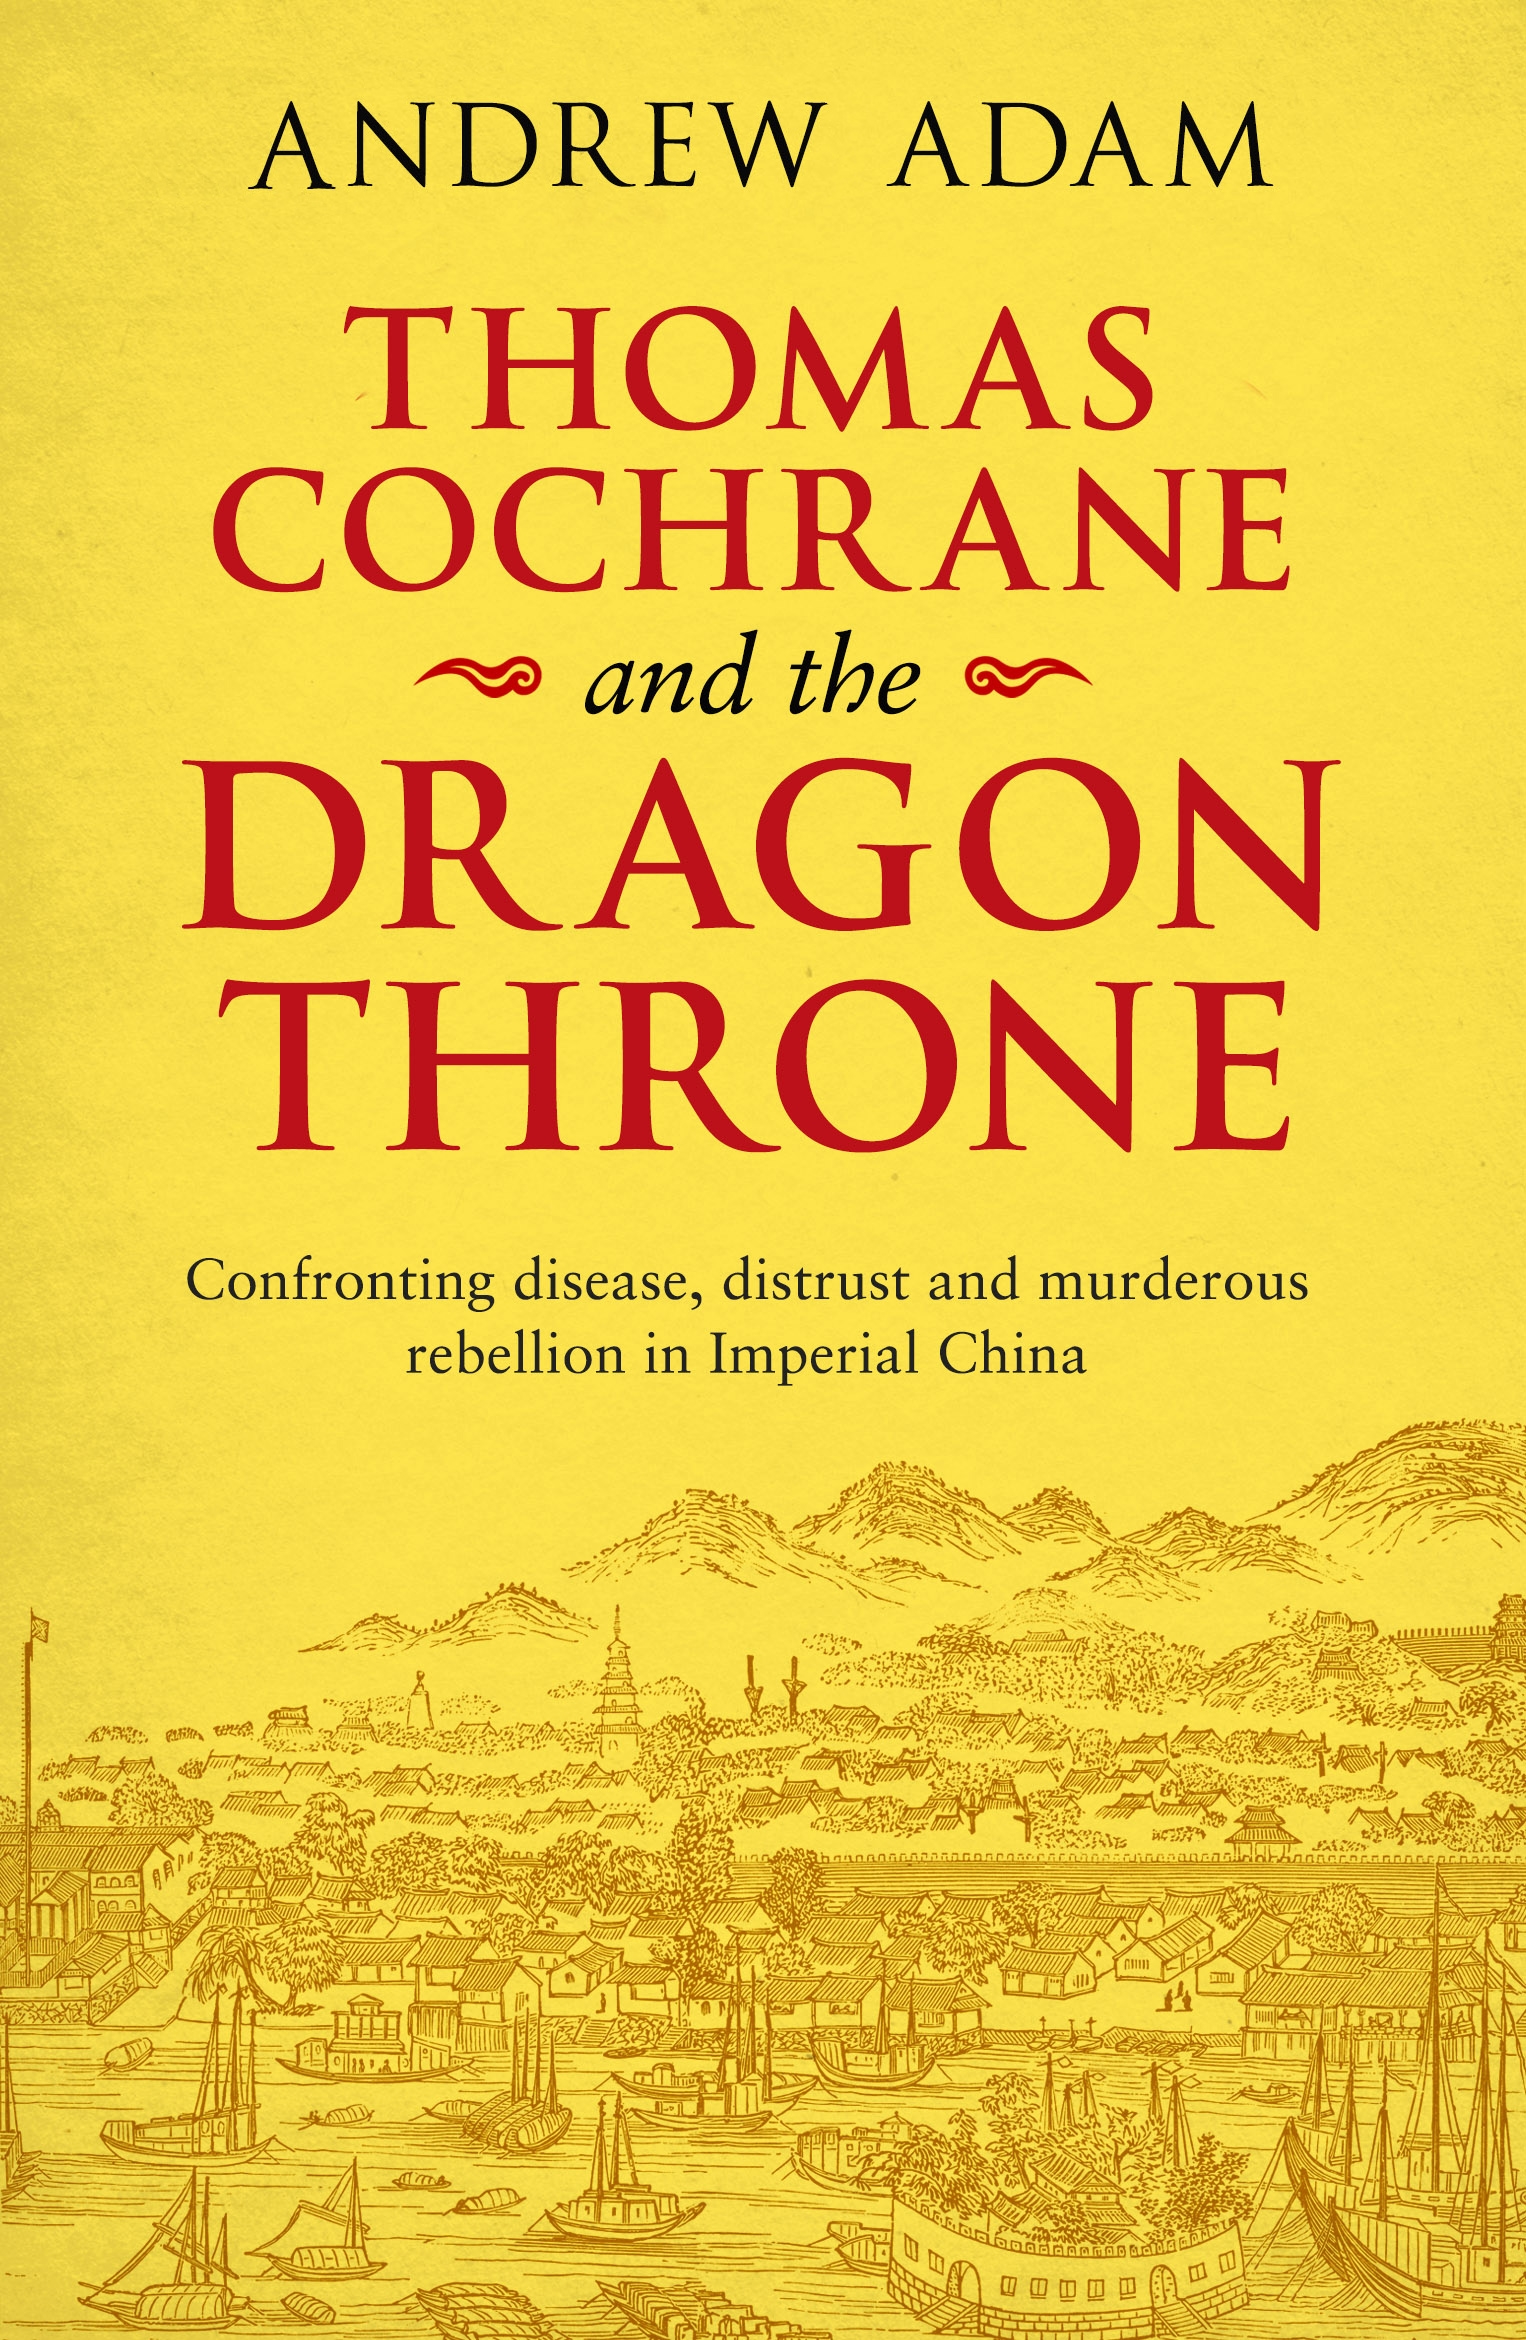 Thomas Cochrane and the Dragon Throne